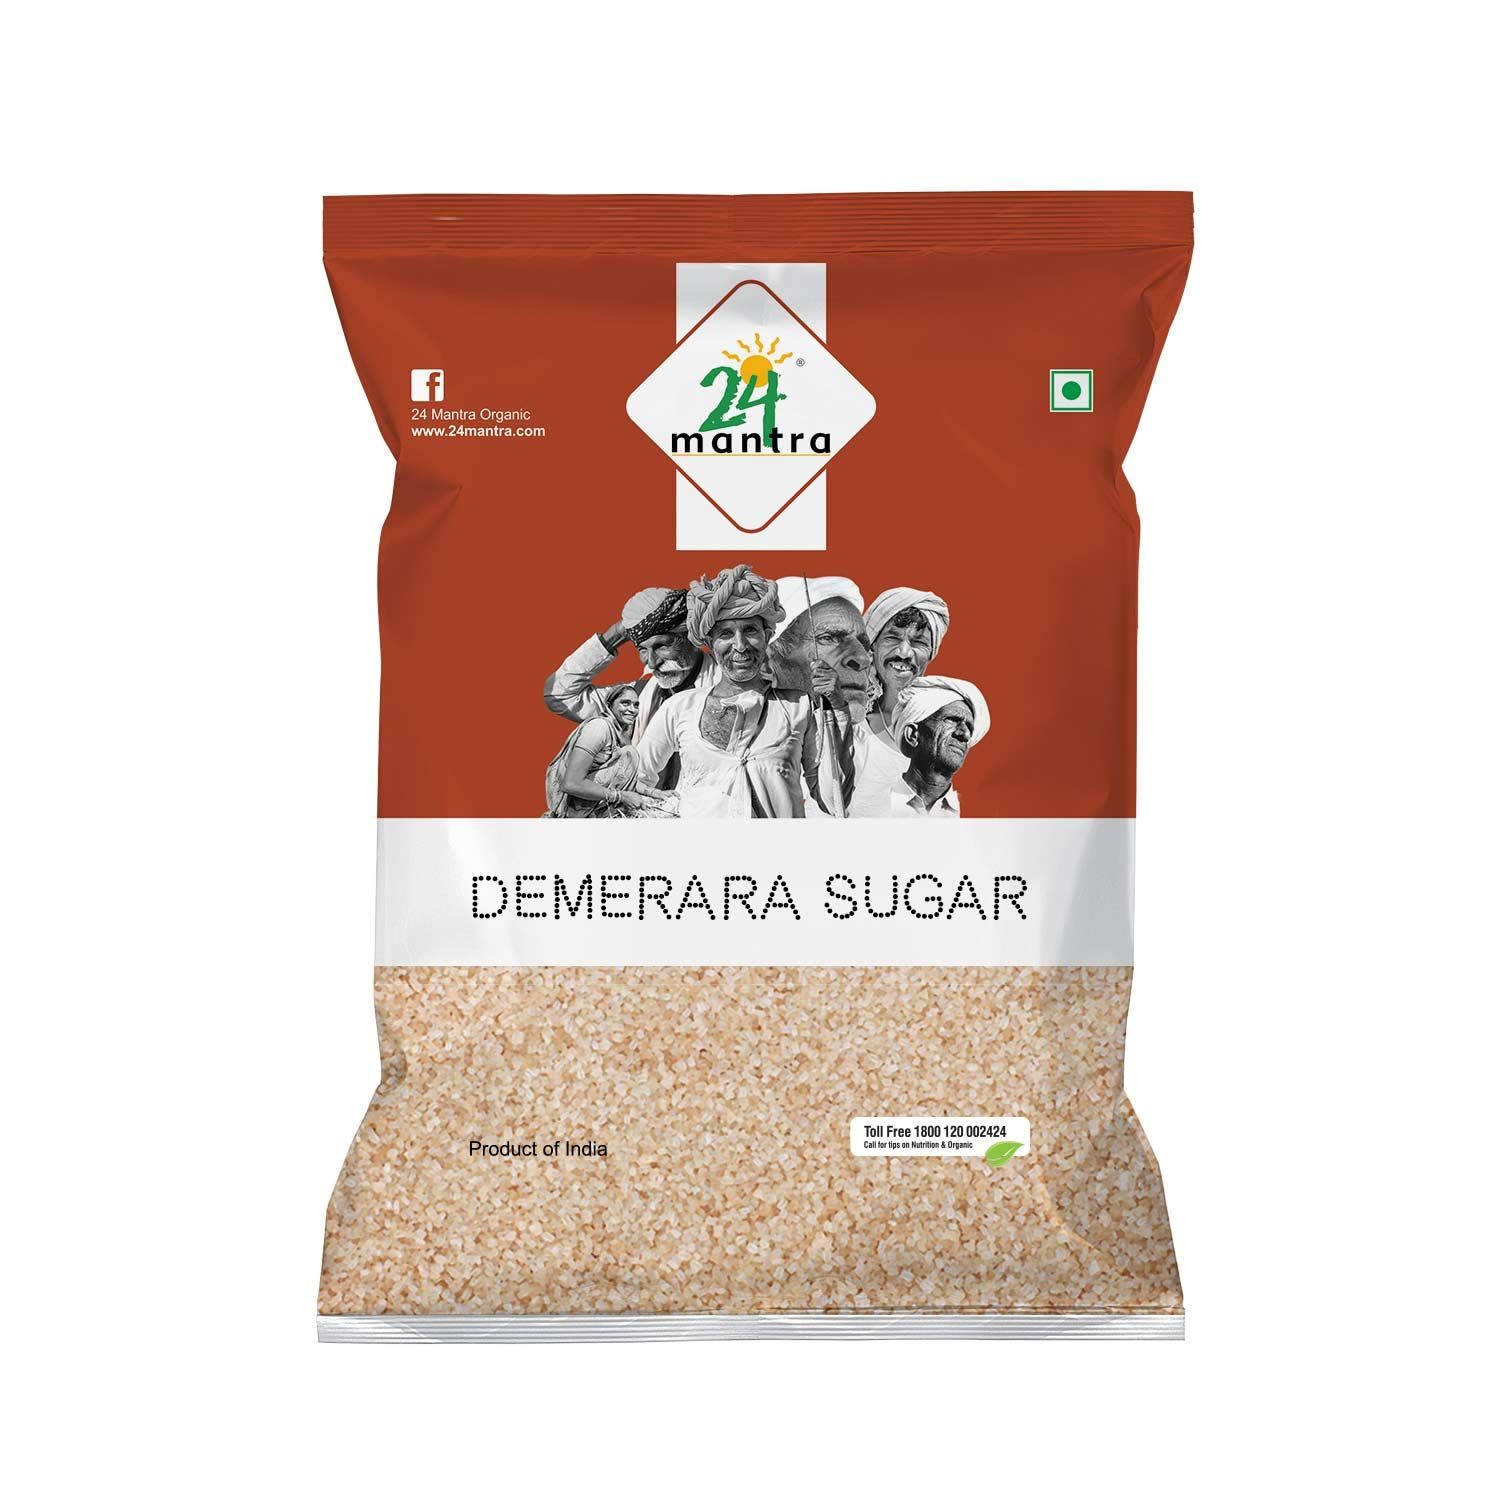 24 Mantra Organic Demerara Sugar Image